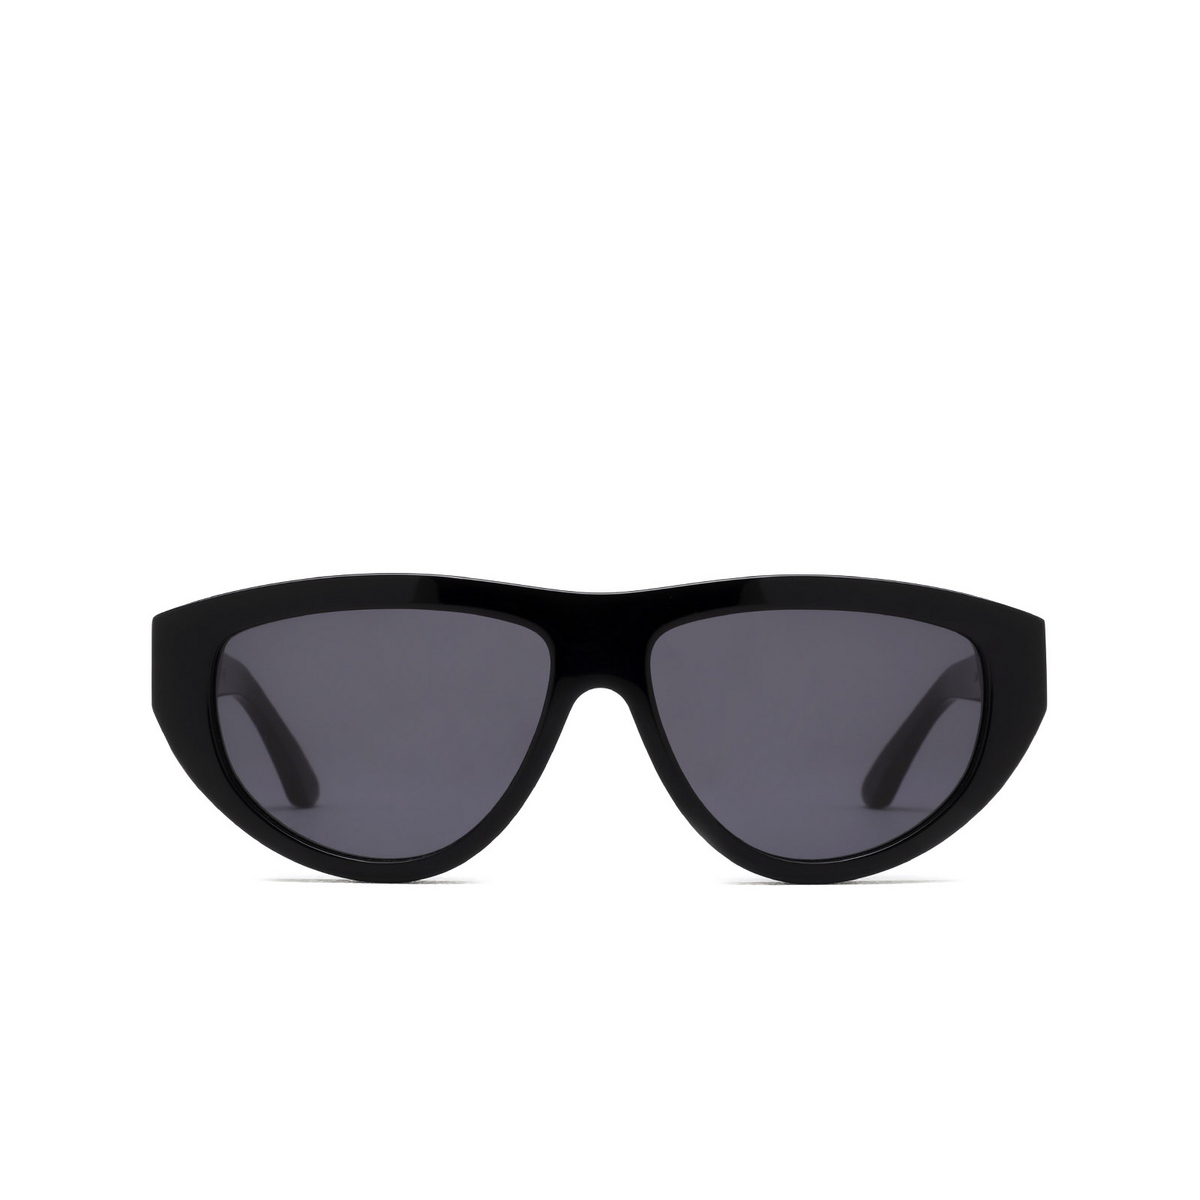 Huma VIKO Sunglasses 06 Black - front view